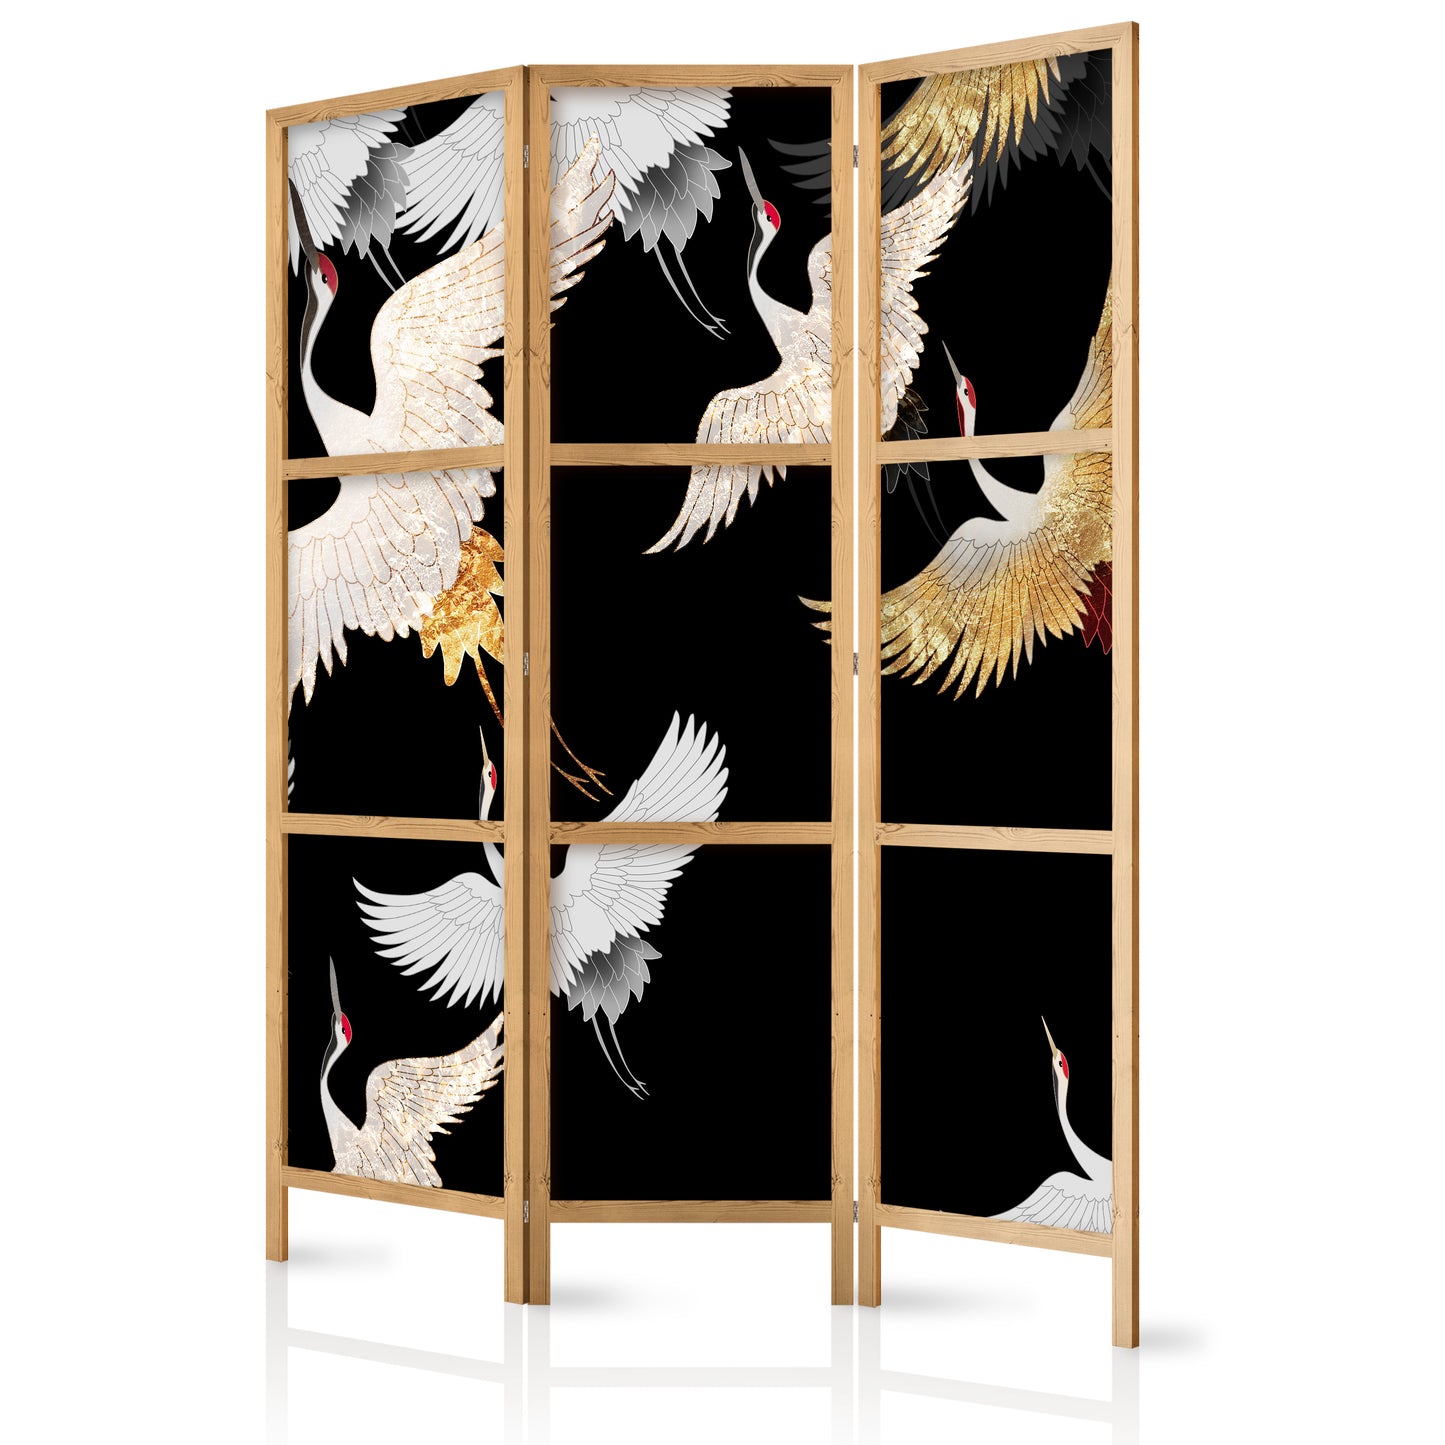 Shoji room Divider - Japanese Room Divider - Cranes at Night - White and Gold Birds Flying Away on a Black Background - ArtfulPrivacy